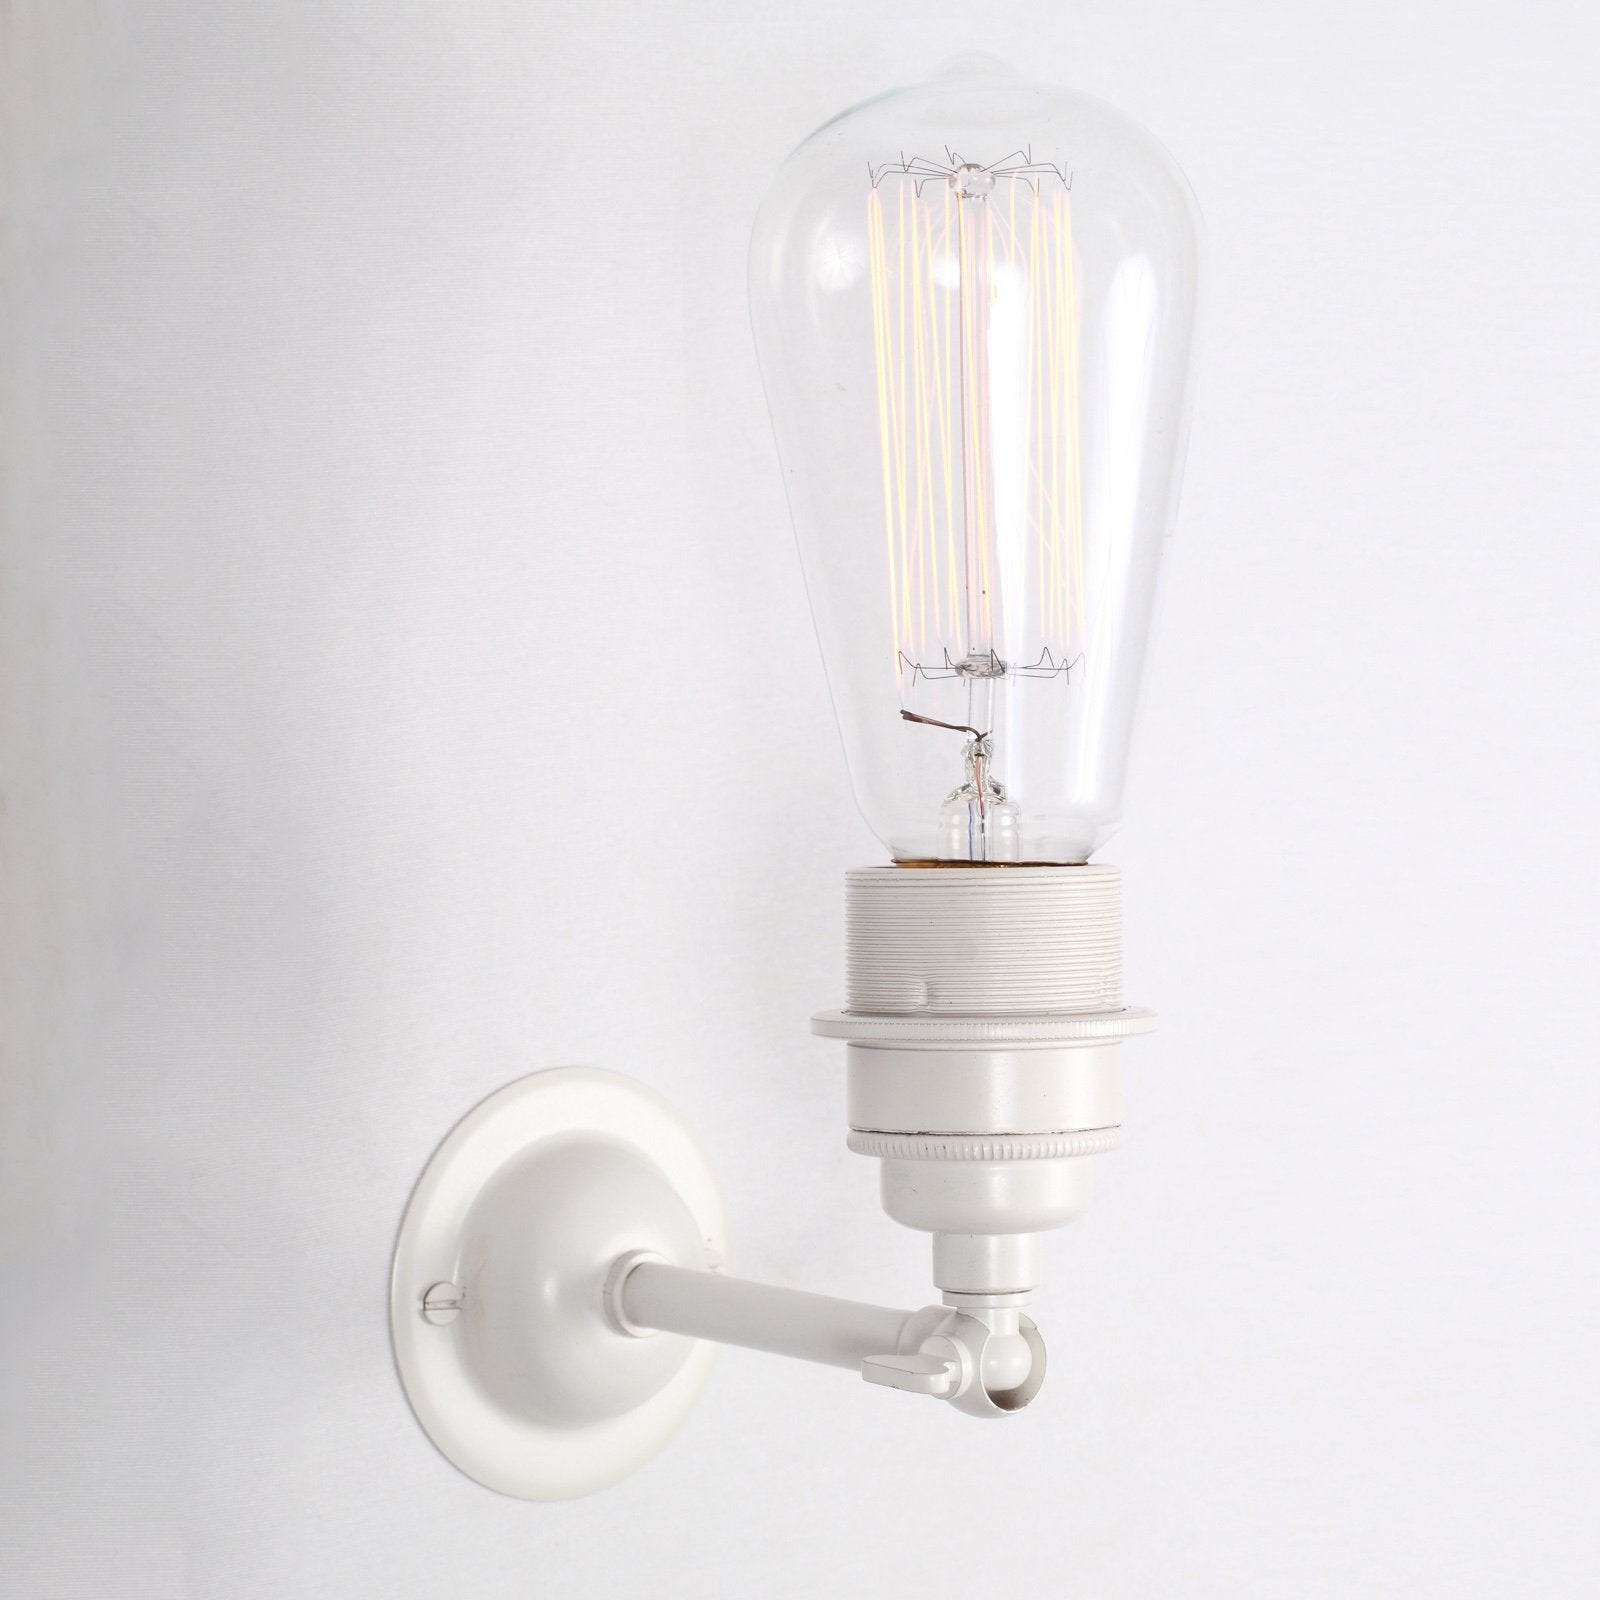 Lome Vintage Minimalist Wall Light - Wall Lights from RETROLIGHT. Made by Mullan Lighting.